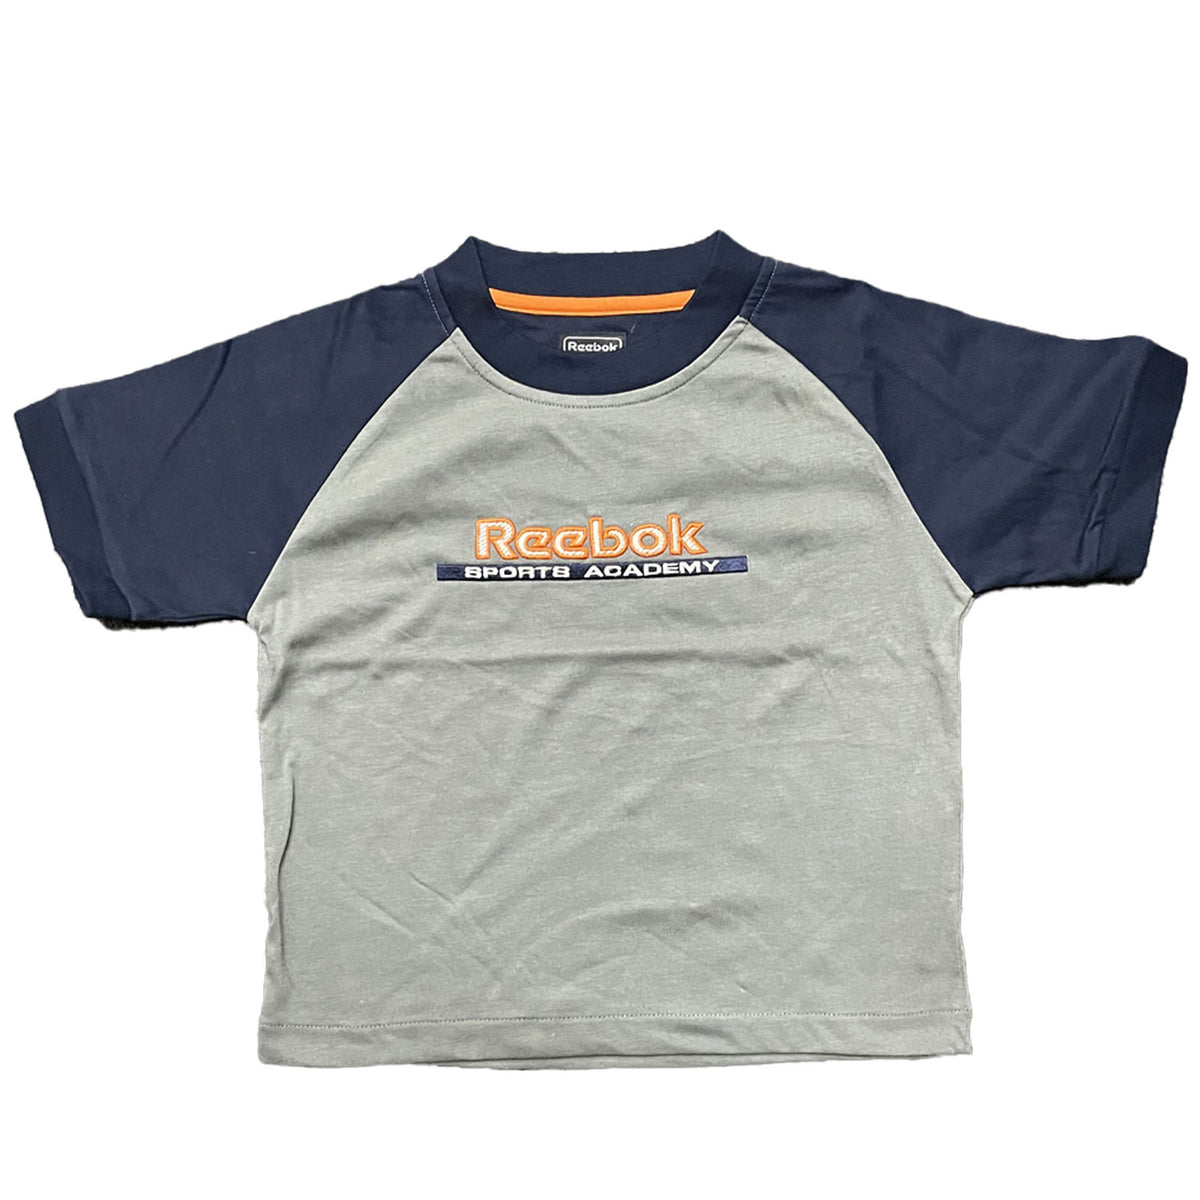 Reebok's Infant Sports Academy T-Shirt